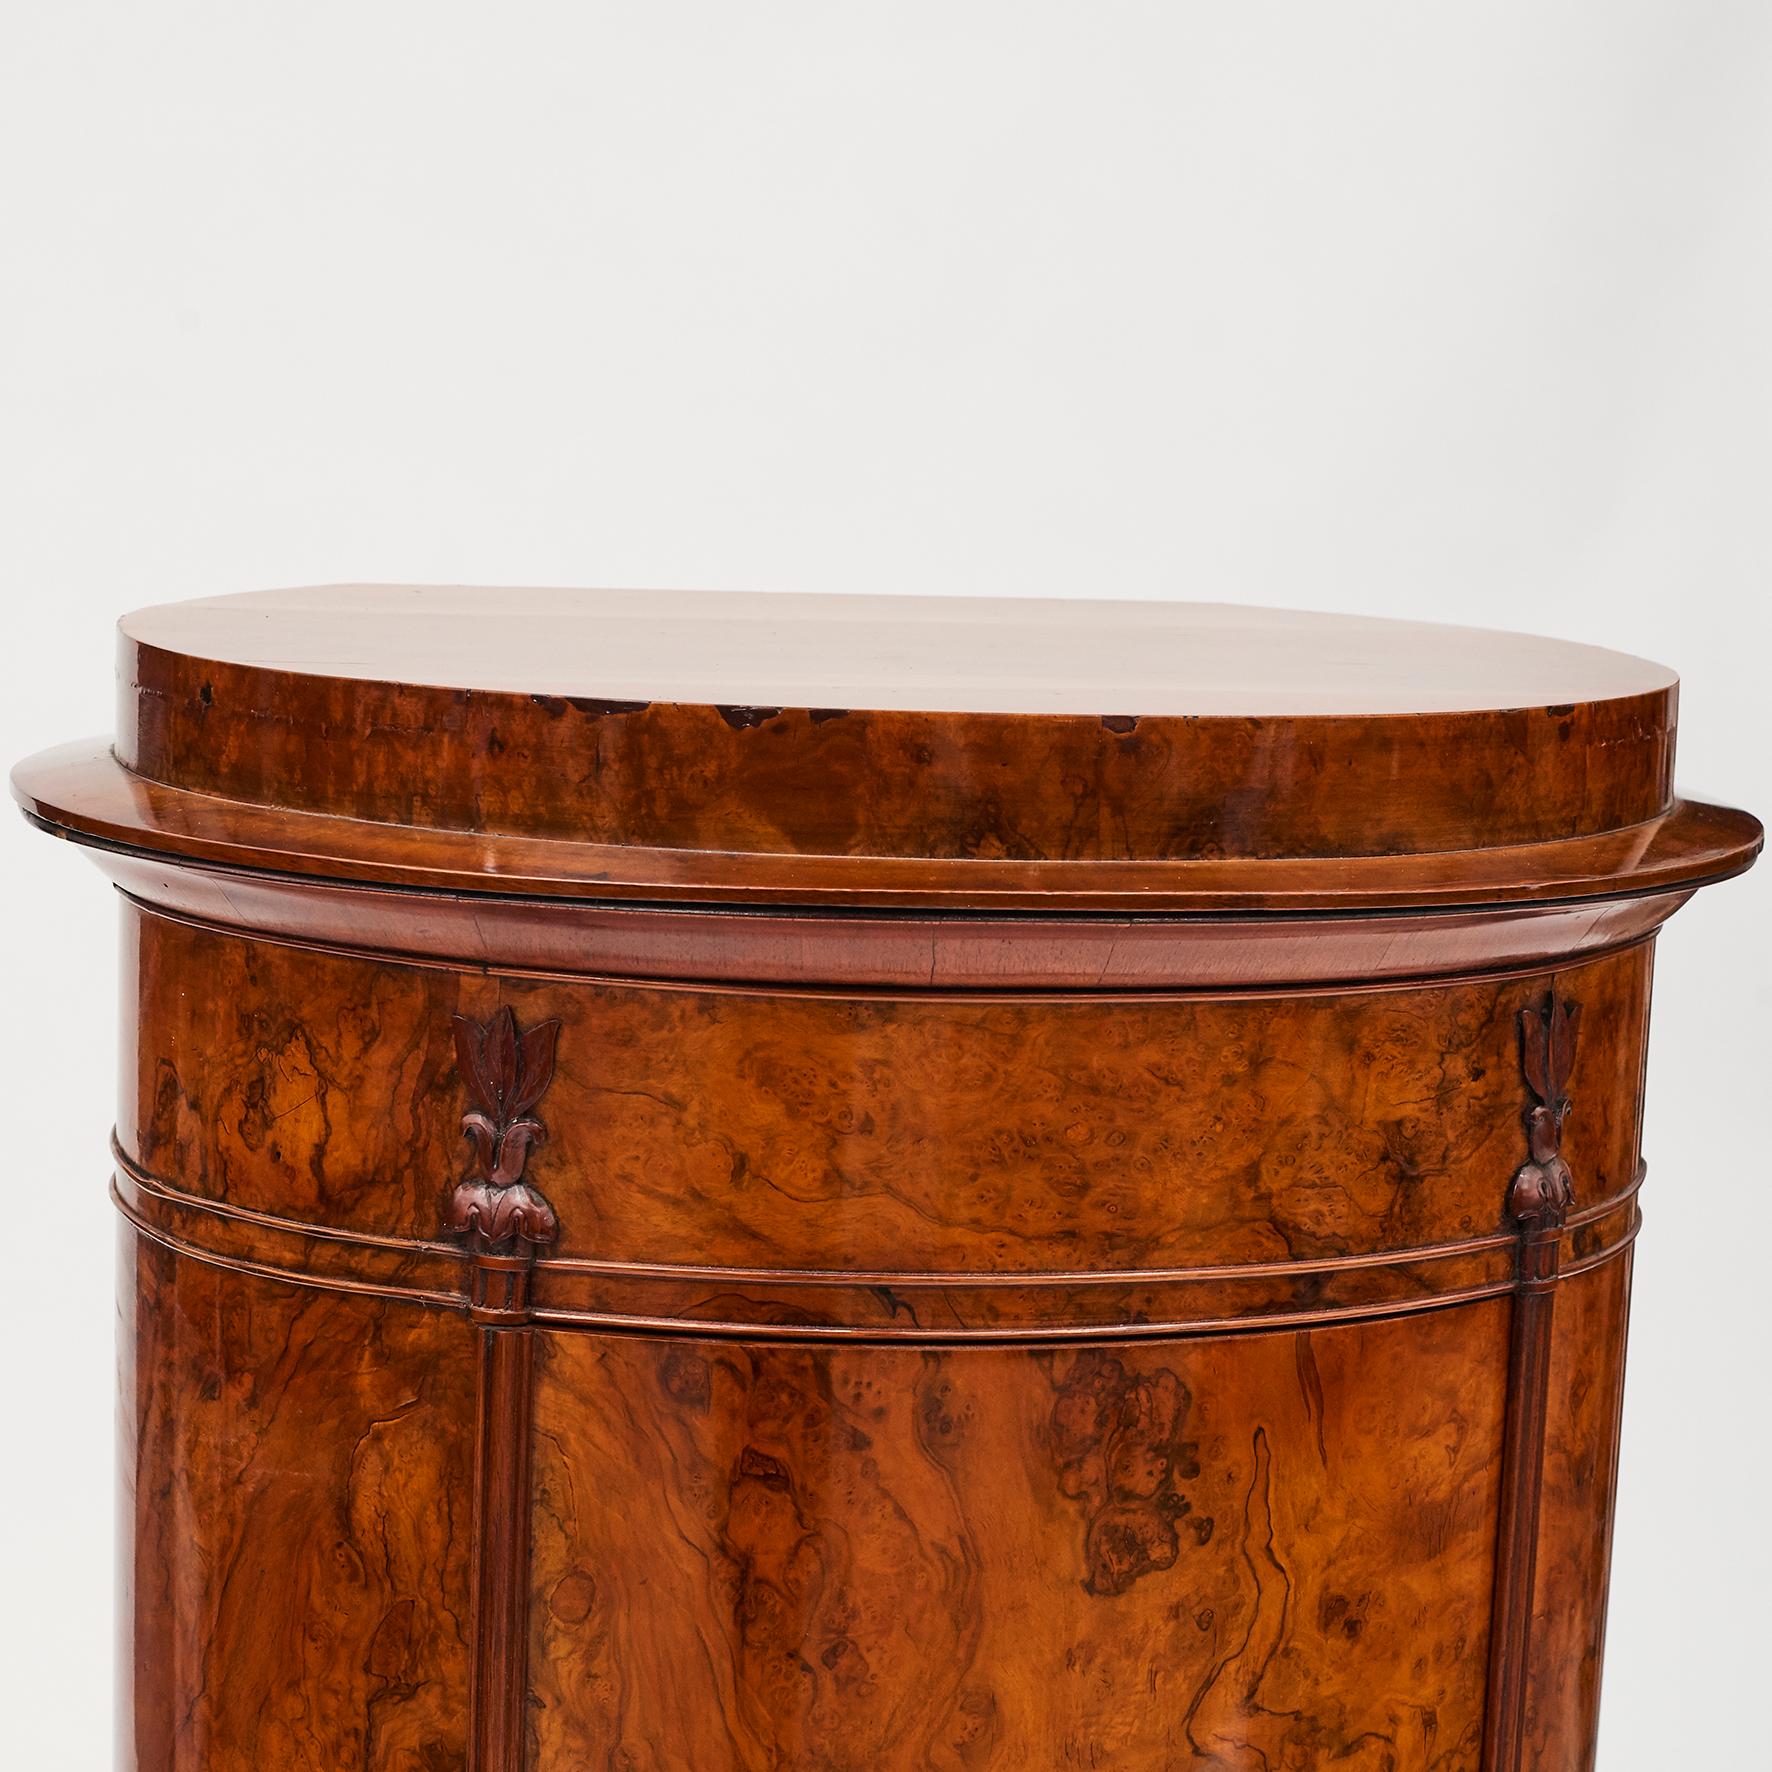 Oak Cylinder Burl Walnut Pedestal Cabinet, Copenhagen, 1830-1840